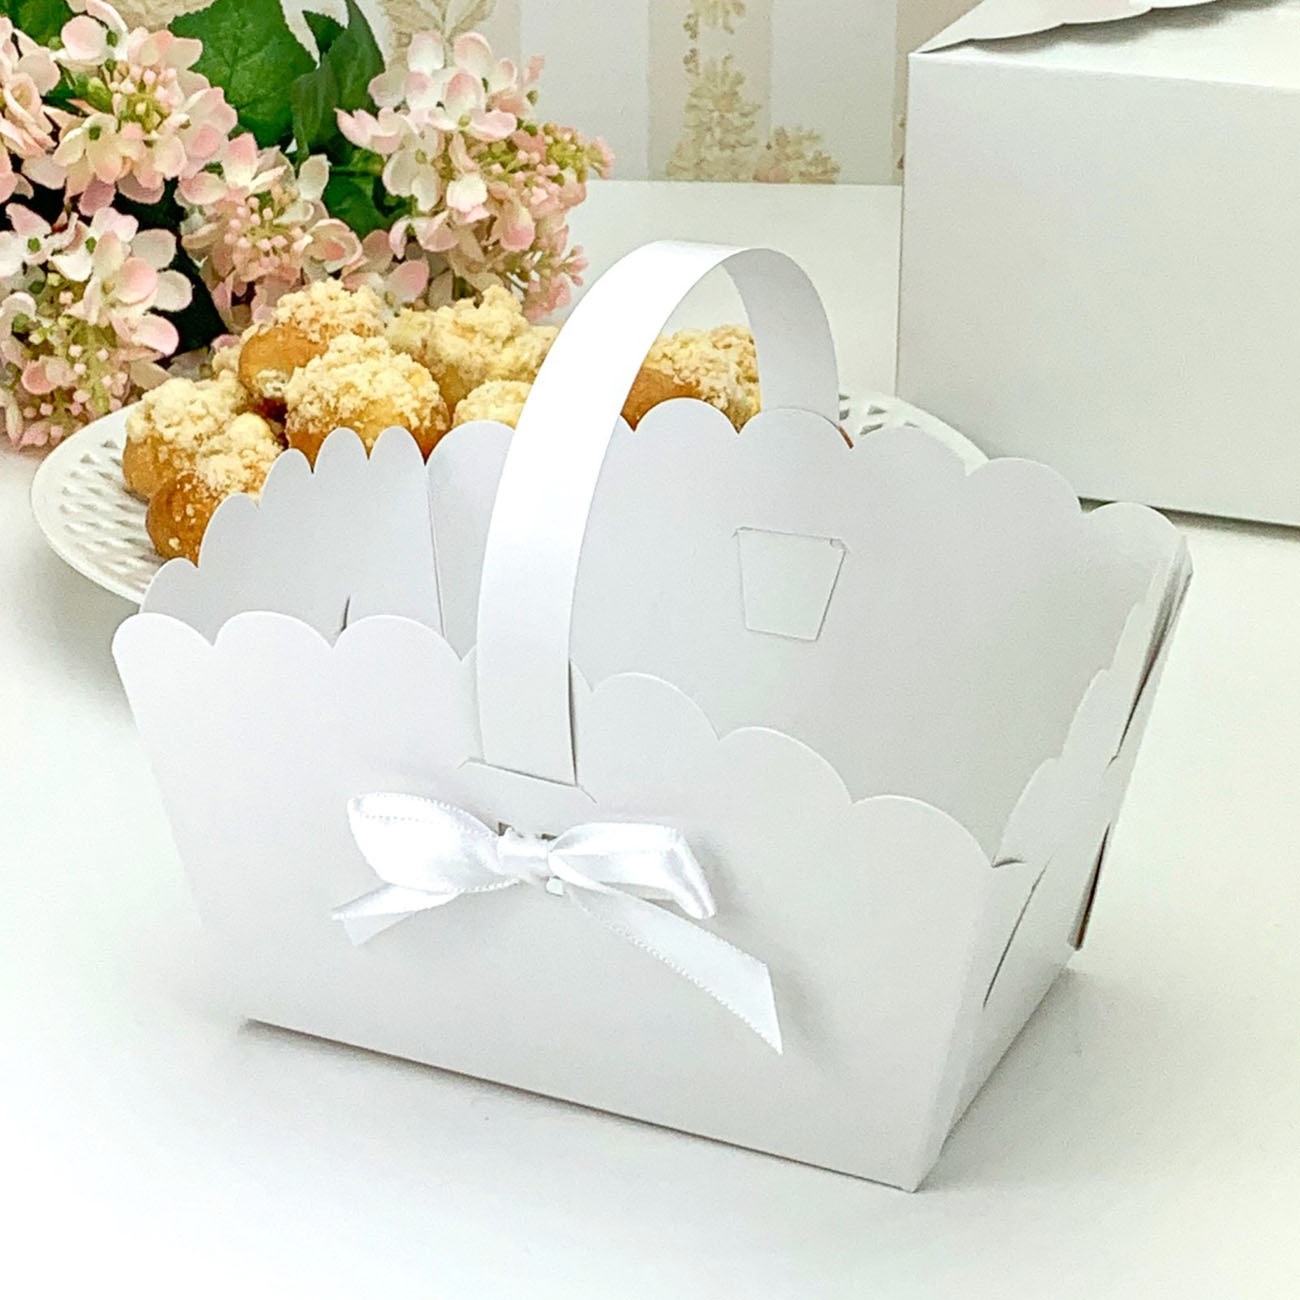 Obrázek k výrobku 23530 - Svadobný košíček na pečivo biely s bielou mašľou (13 x 9 x 9,5 cm)